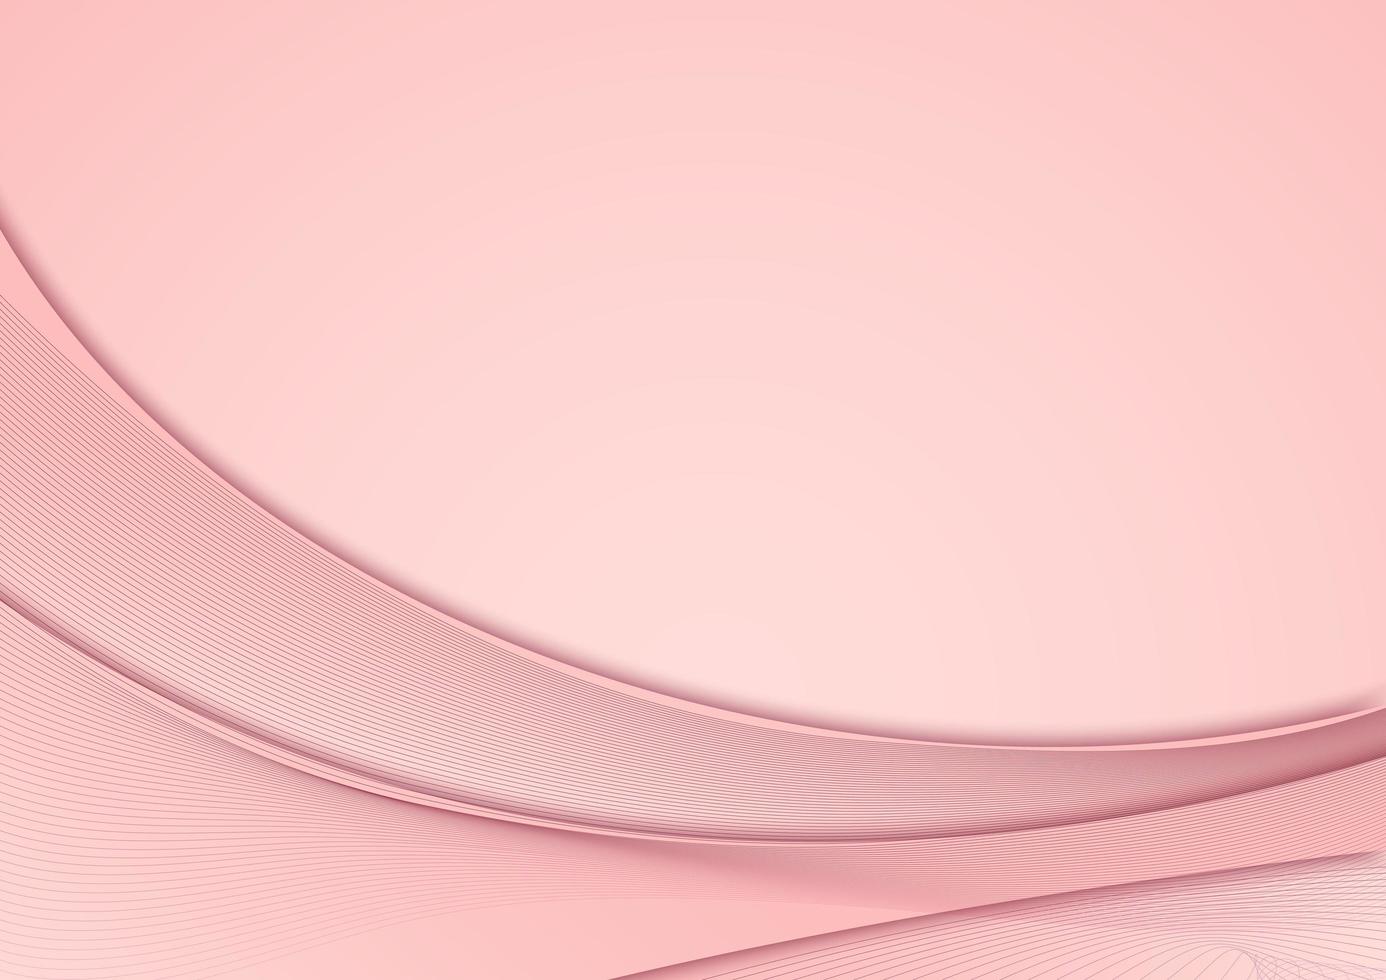 abstrakt bakgrund rosa kurva med linjeelement. vektor